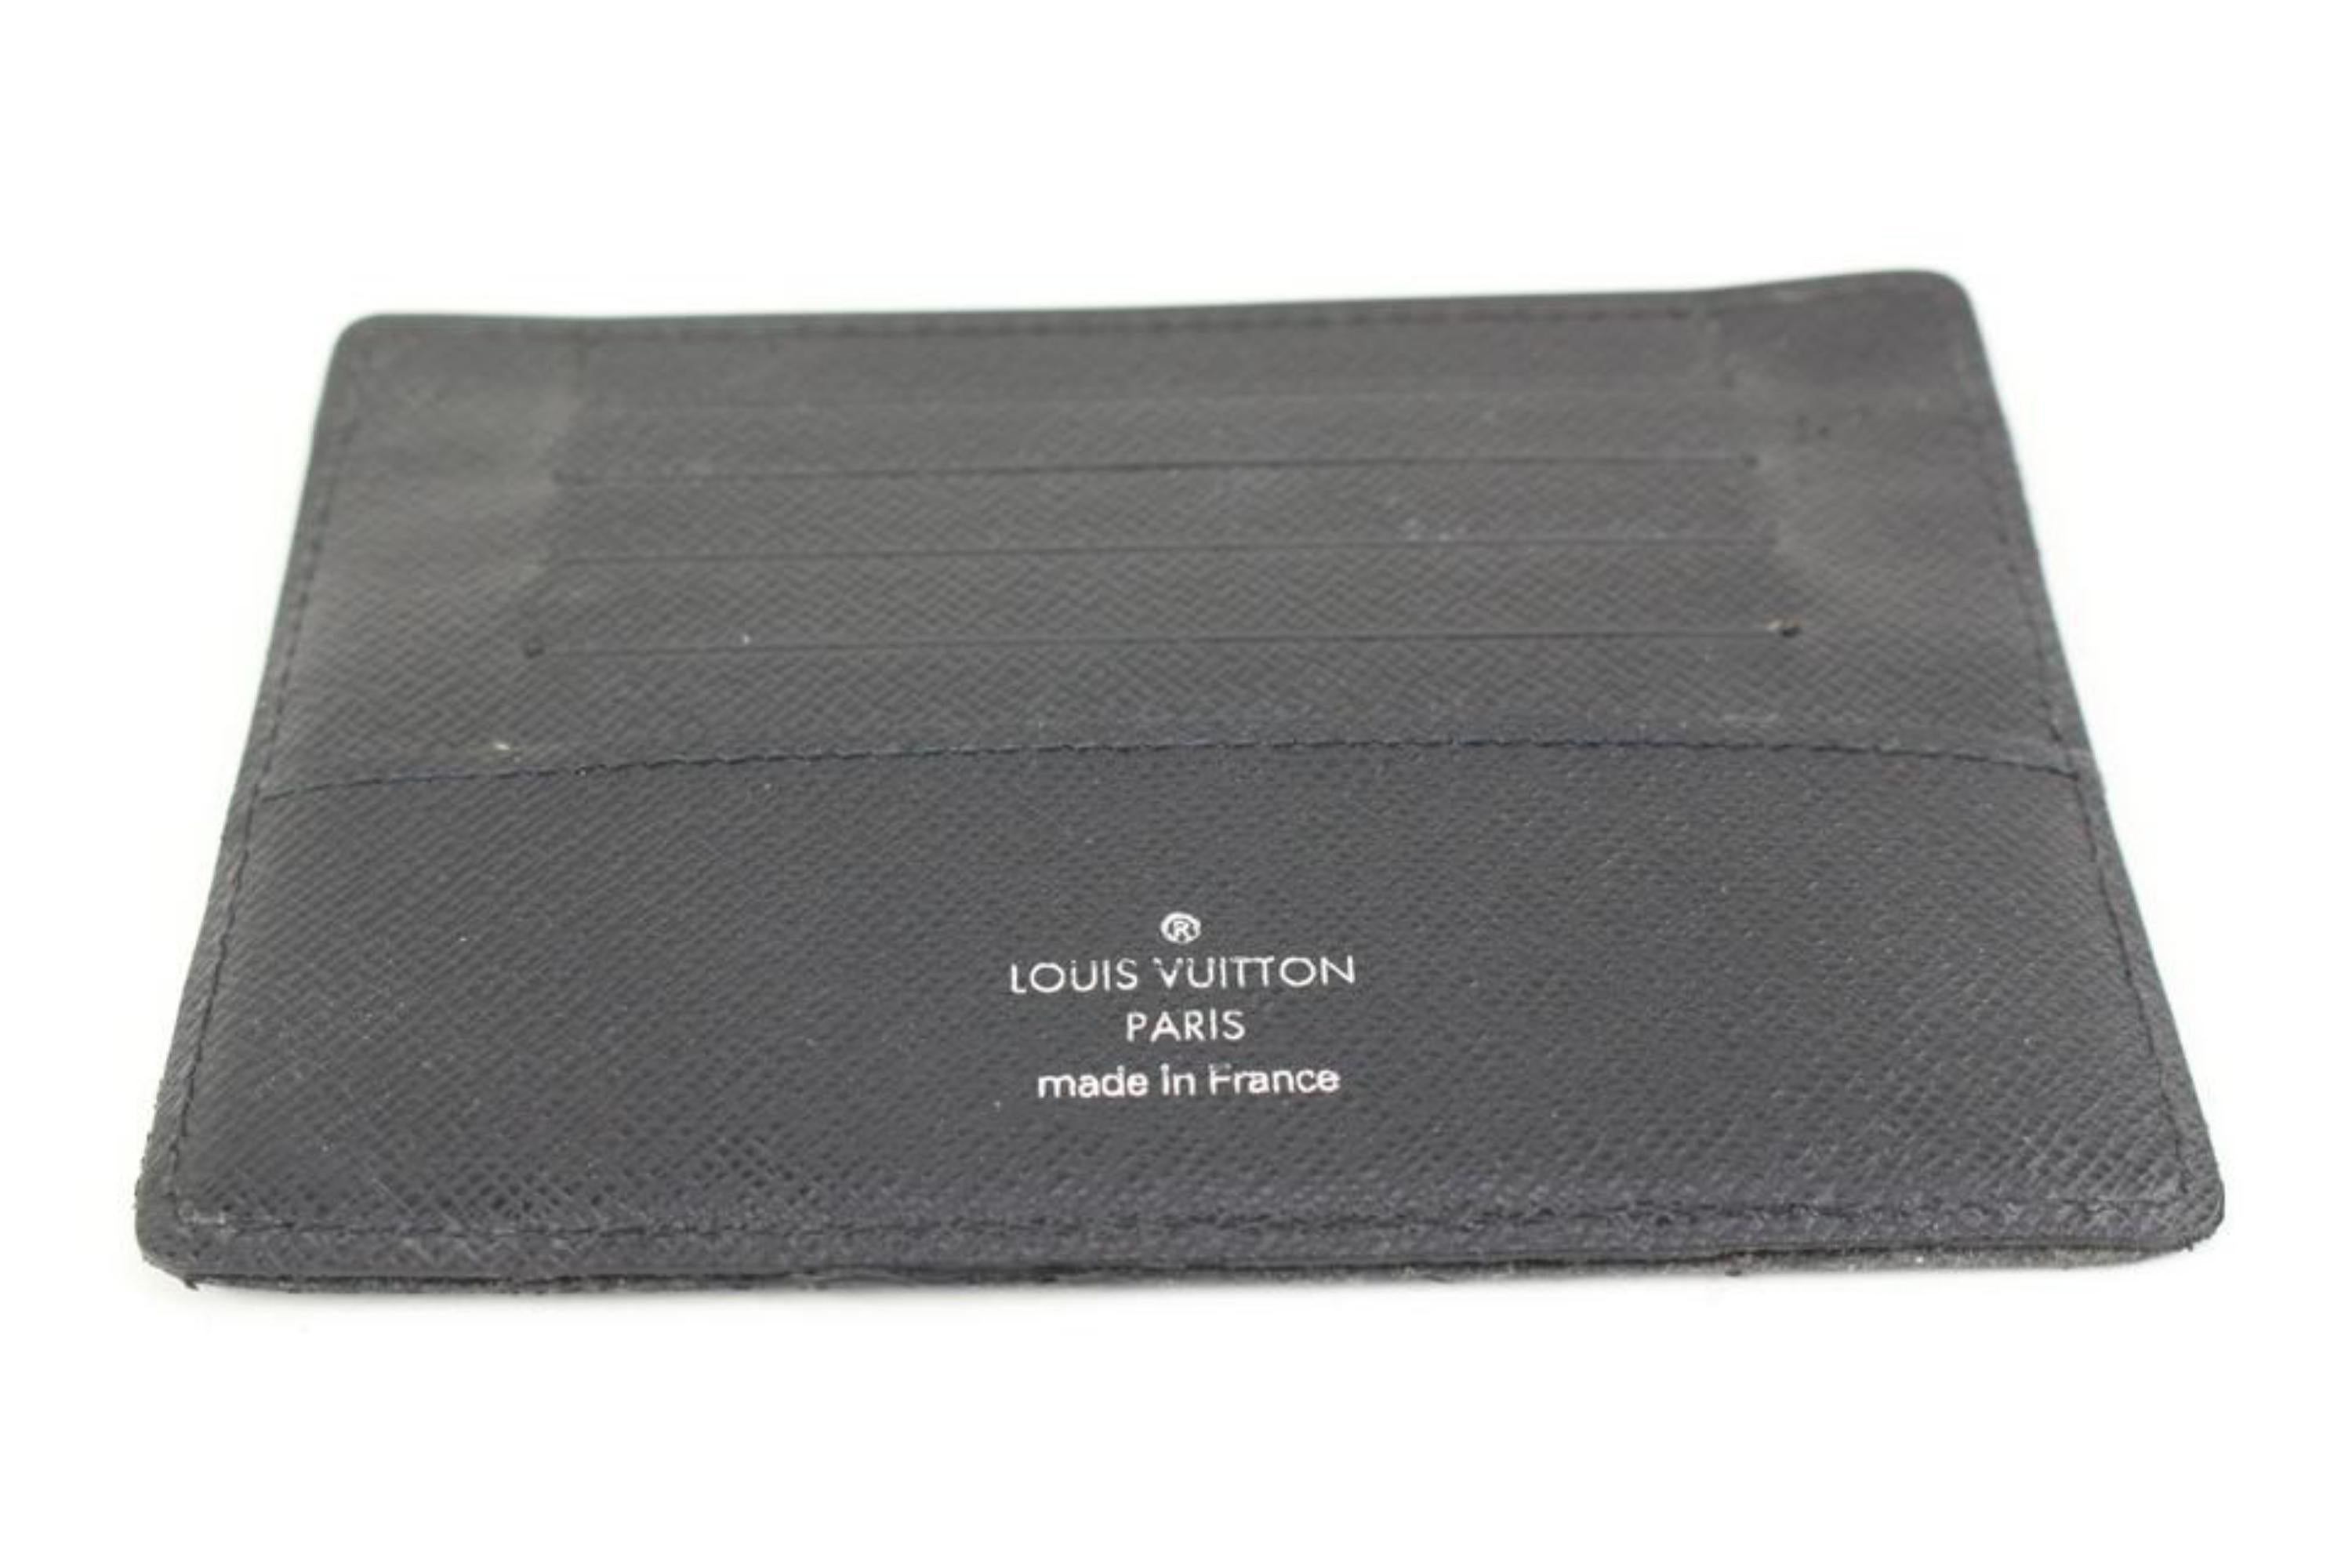 Louis Vuitton Damier Graphite Large Card Holder Wallet Case Insert 25lk413s For Sale 2